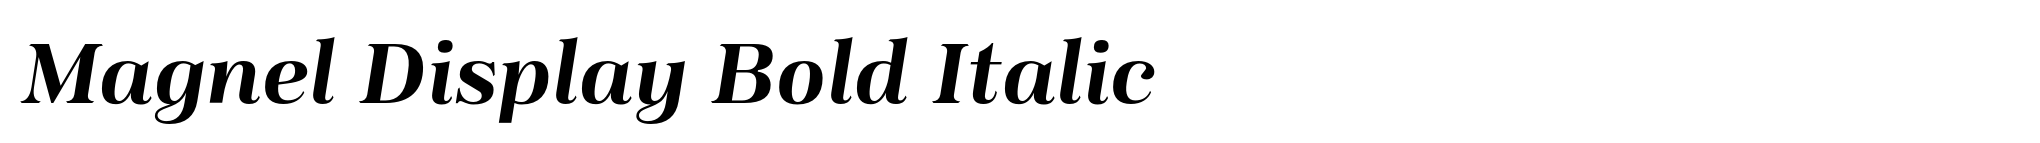 Magnel Display Bold Italic image